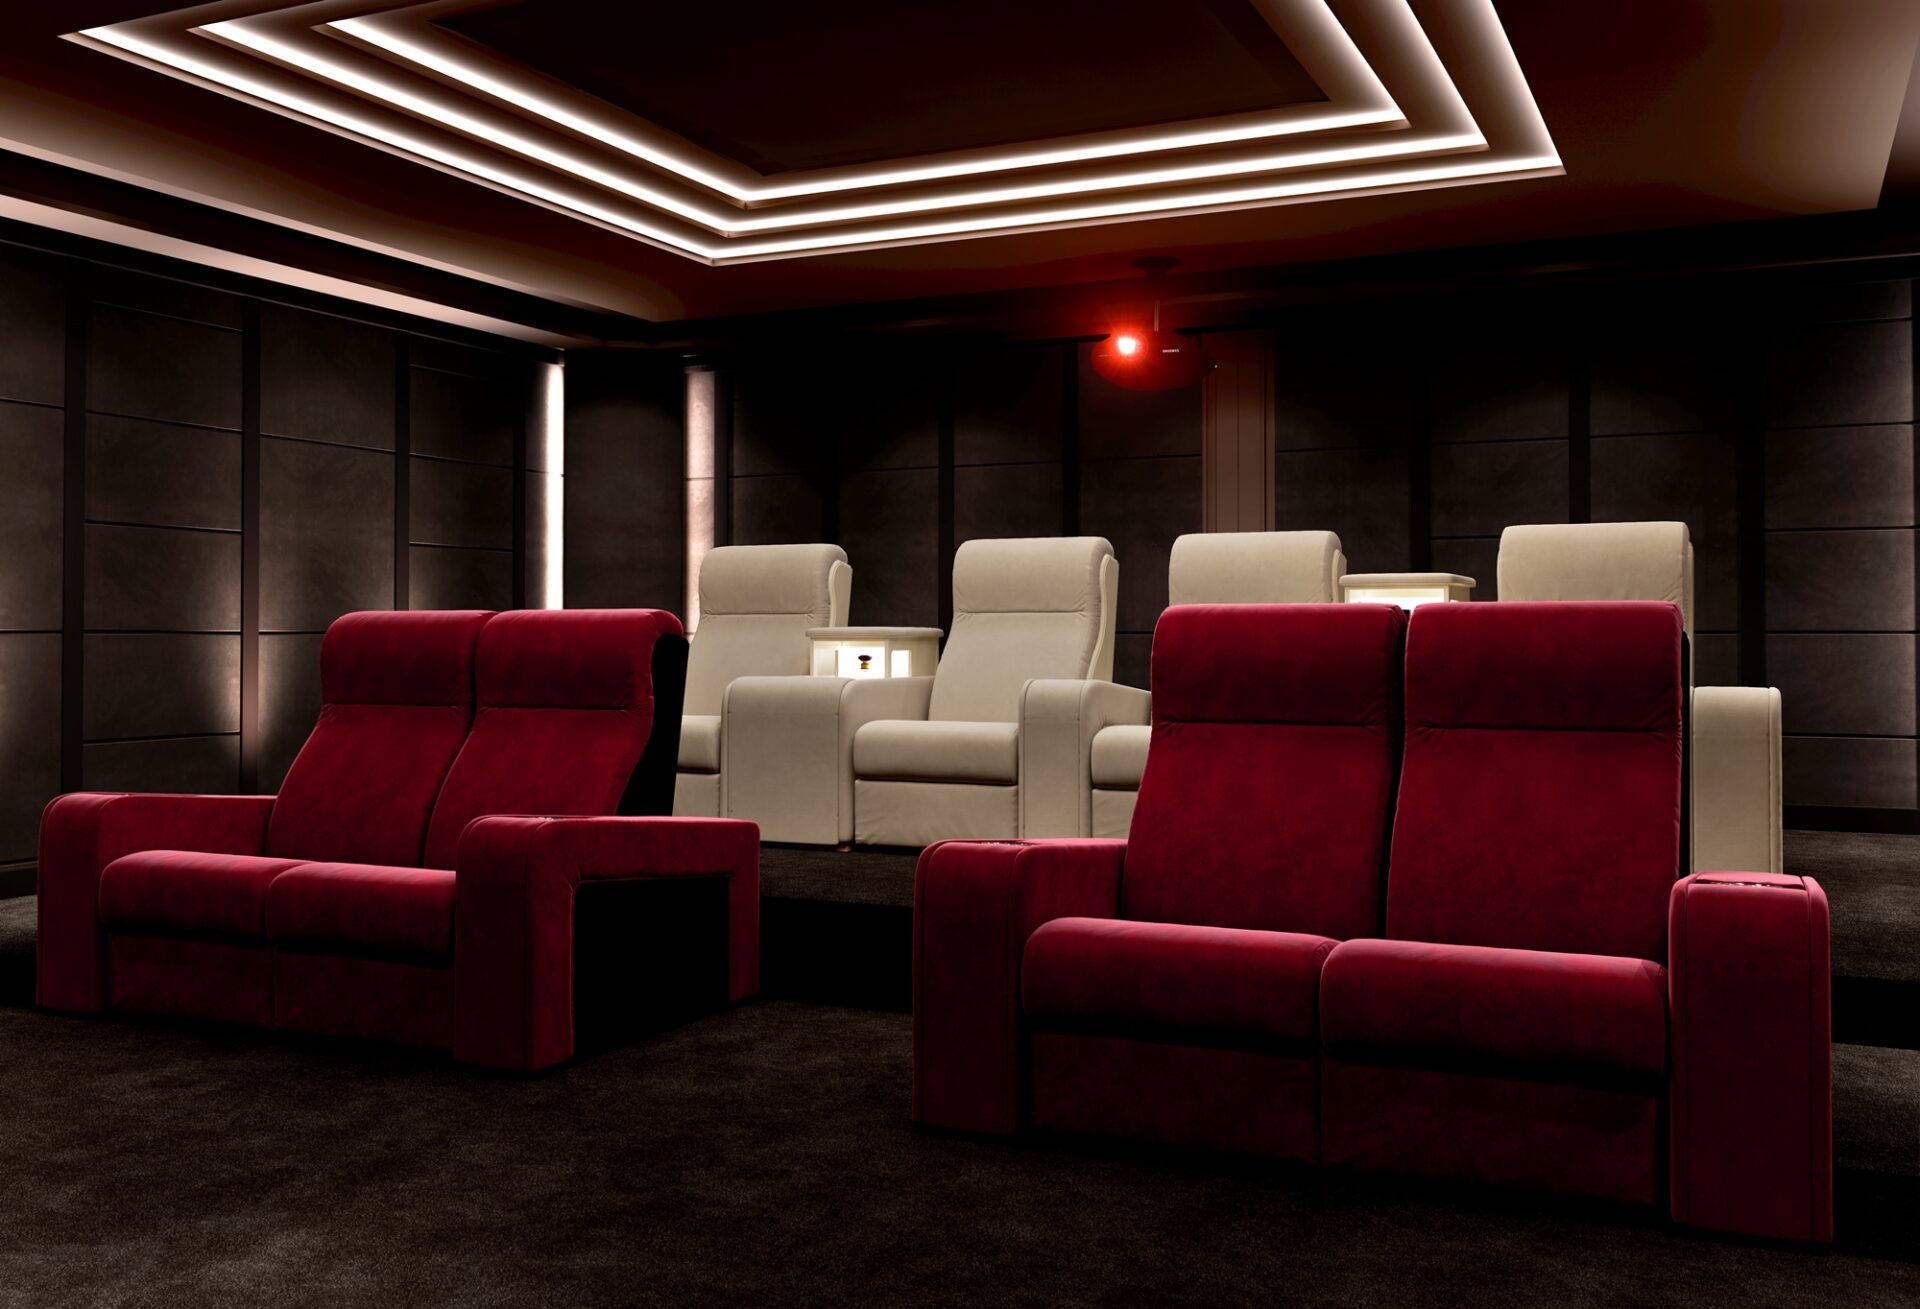 poltrona cinema moderna per sala cinema di lusso